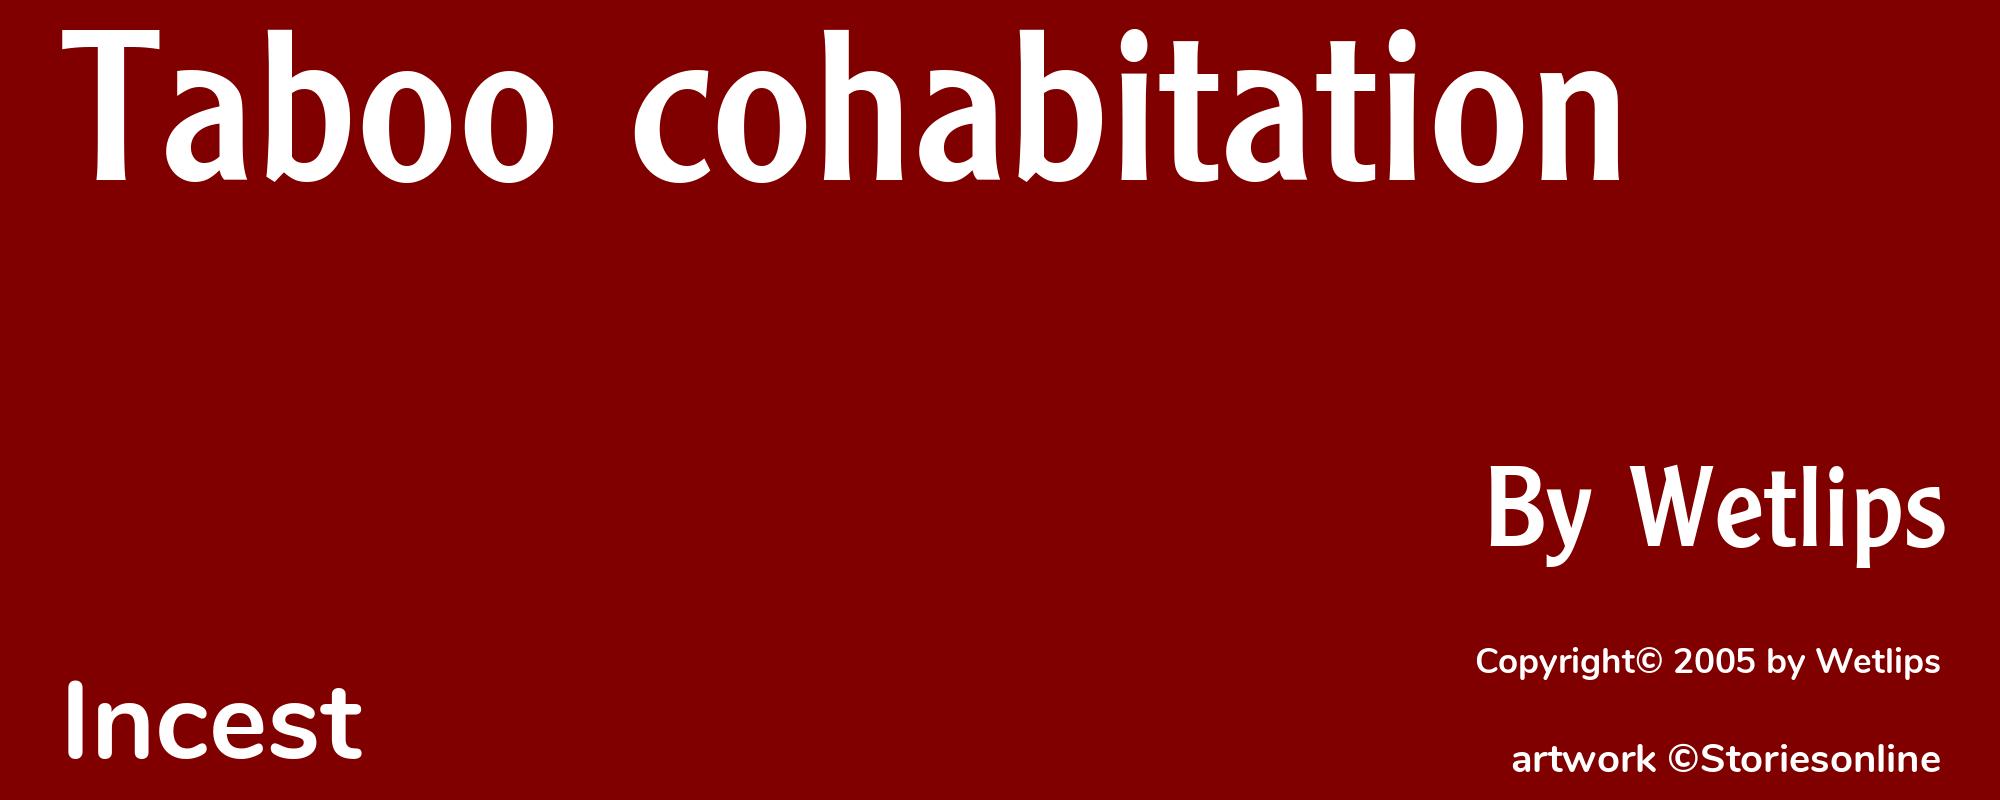 Taboo cohabitation - Cover